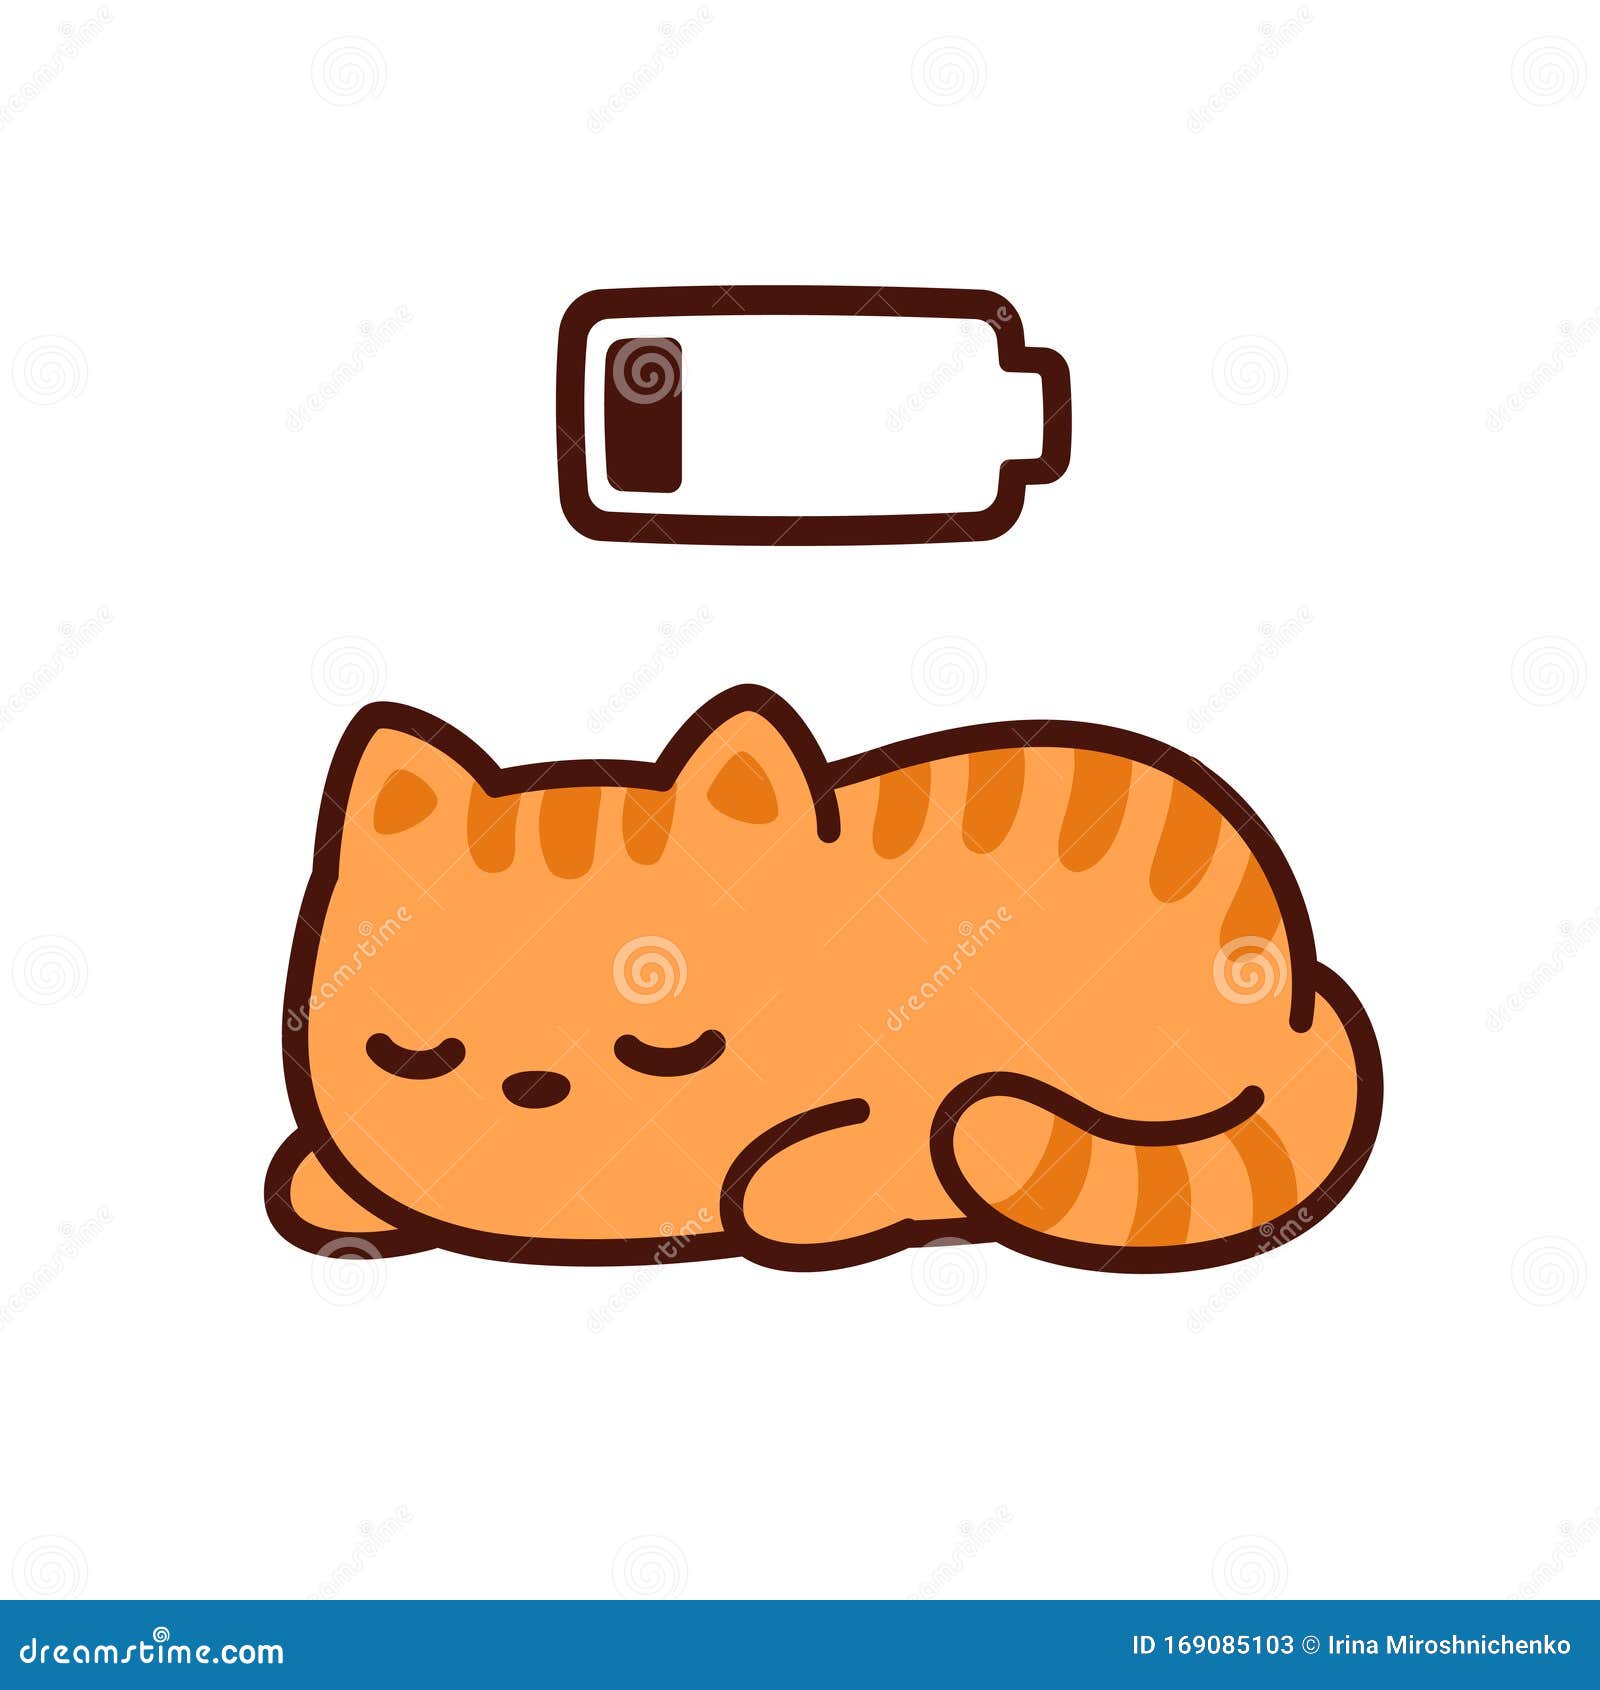 Cute Cartoon Sleeping Cat Stock Vector. Illustration Of Charging - 169085103